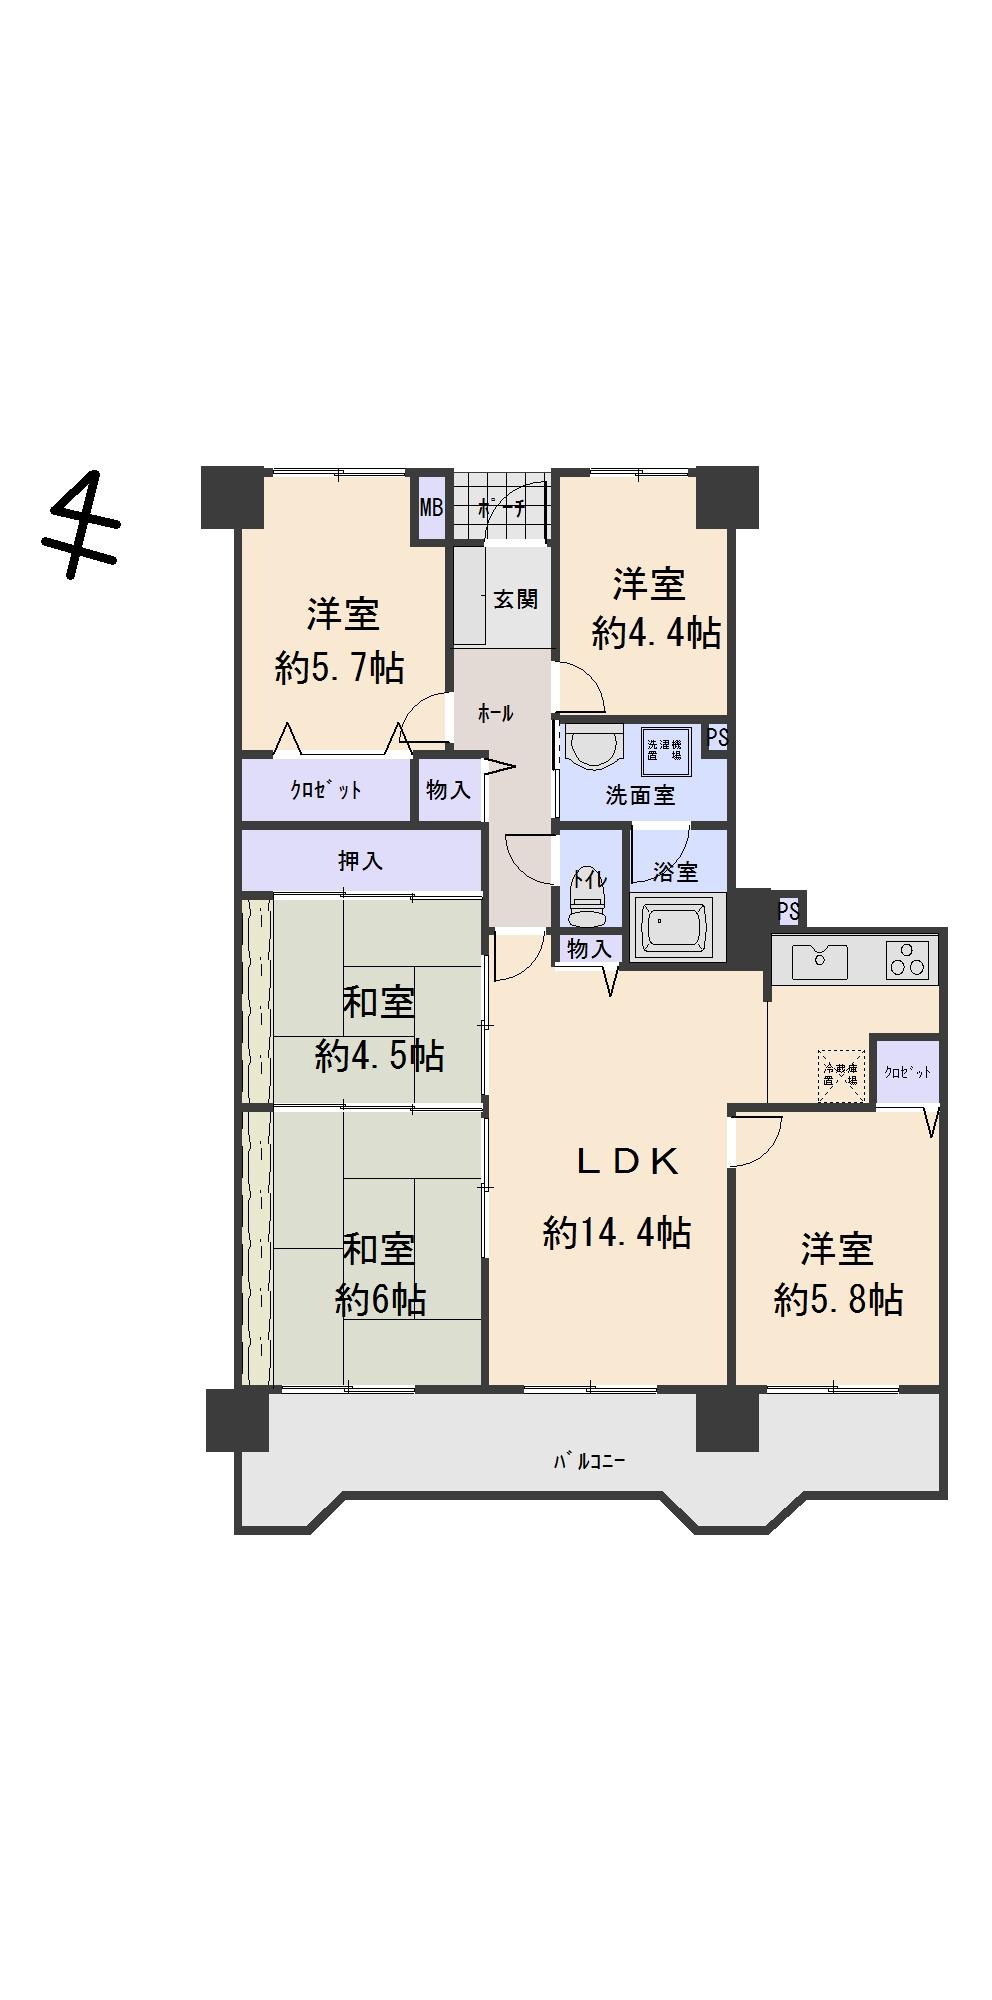 Floor plan. 5LDK, Price 14.9 million yen, Occupied area 88.82 sq m , Balcony area 14.05 sq m